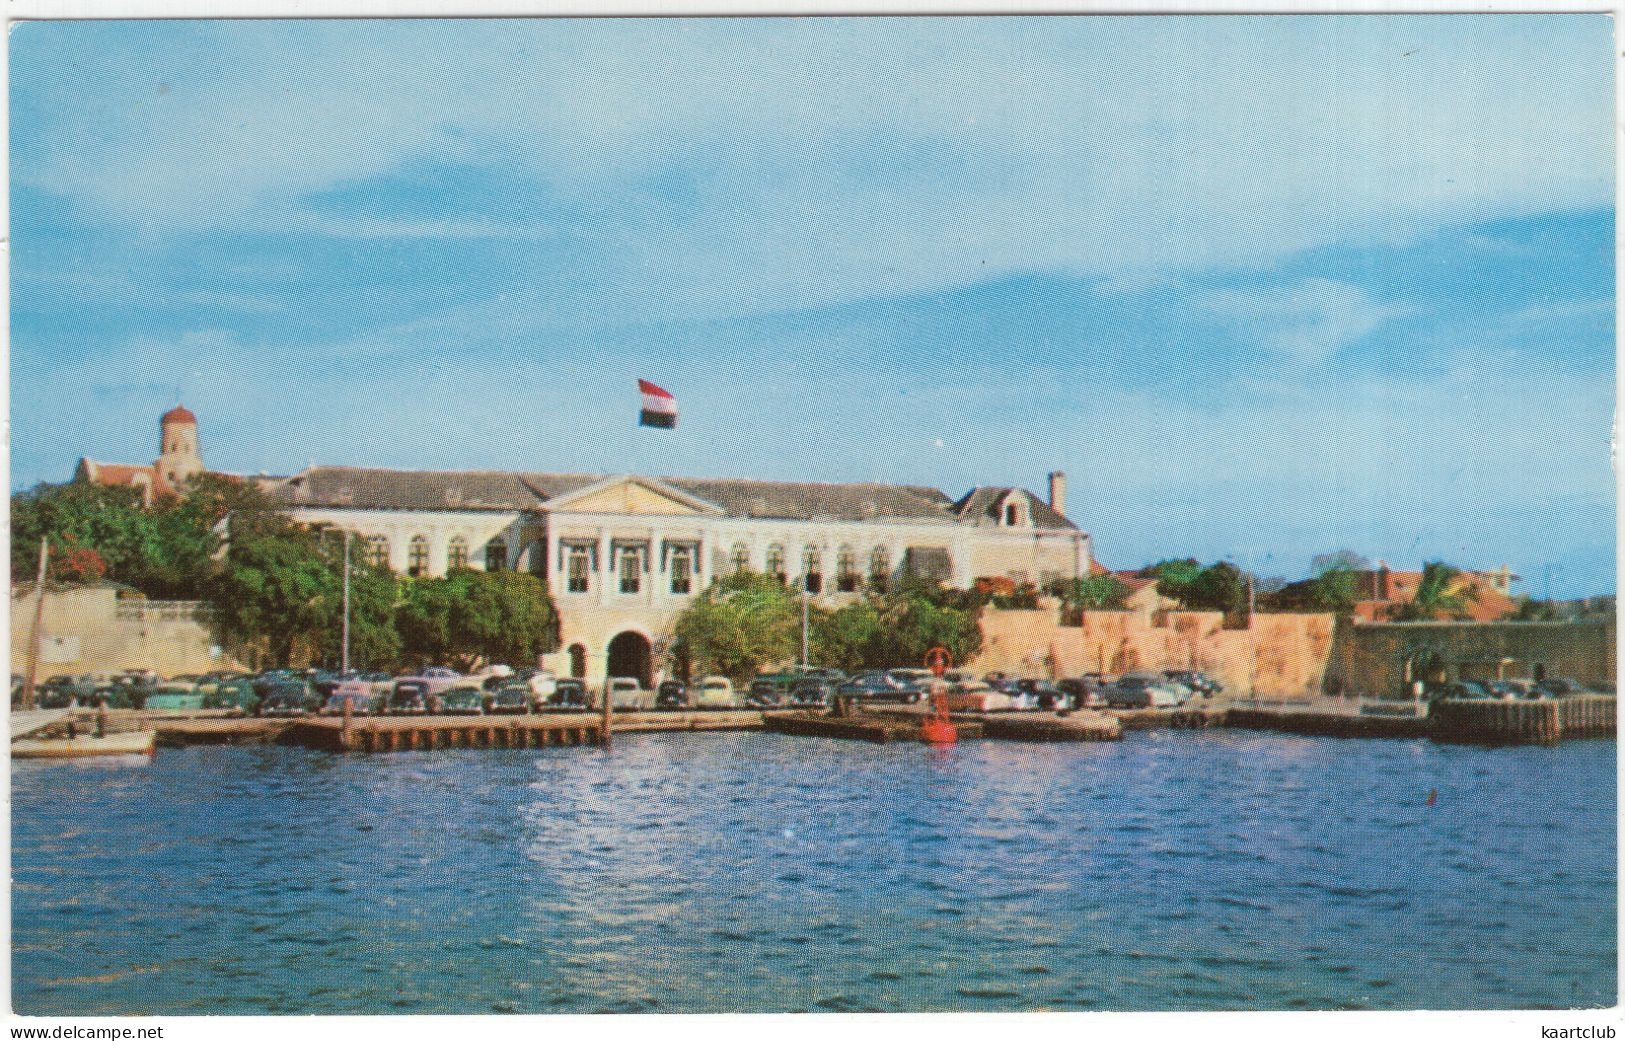 Governor's Palace - Curacao, N.A.  - (Nederlandse Antillen) - Curaçao